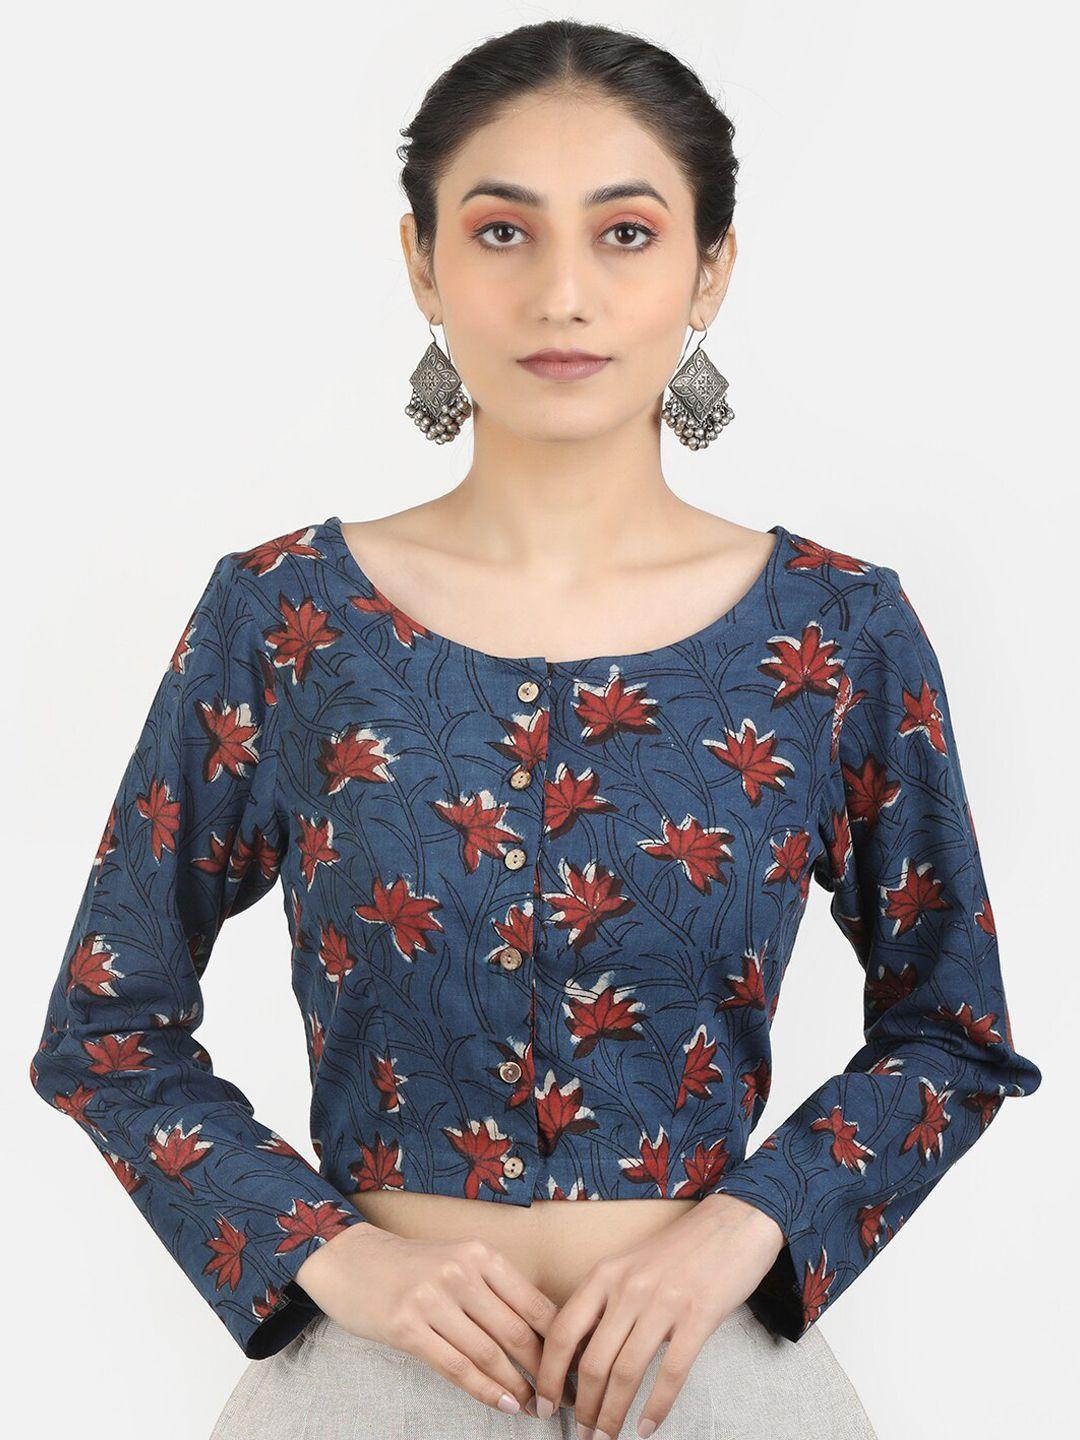 llajja printed pure cotton saree blouse